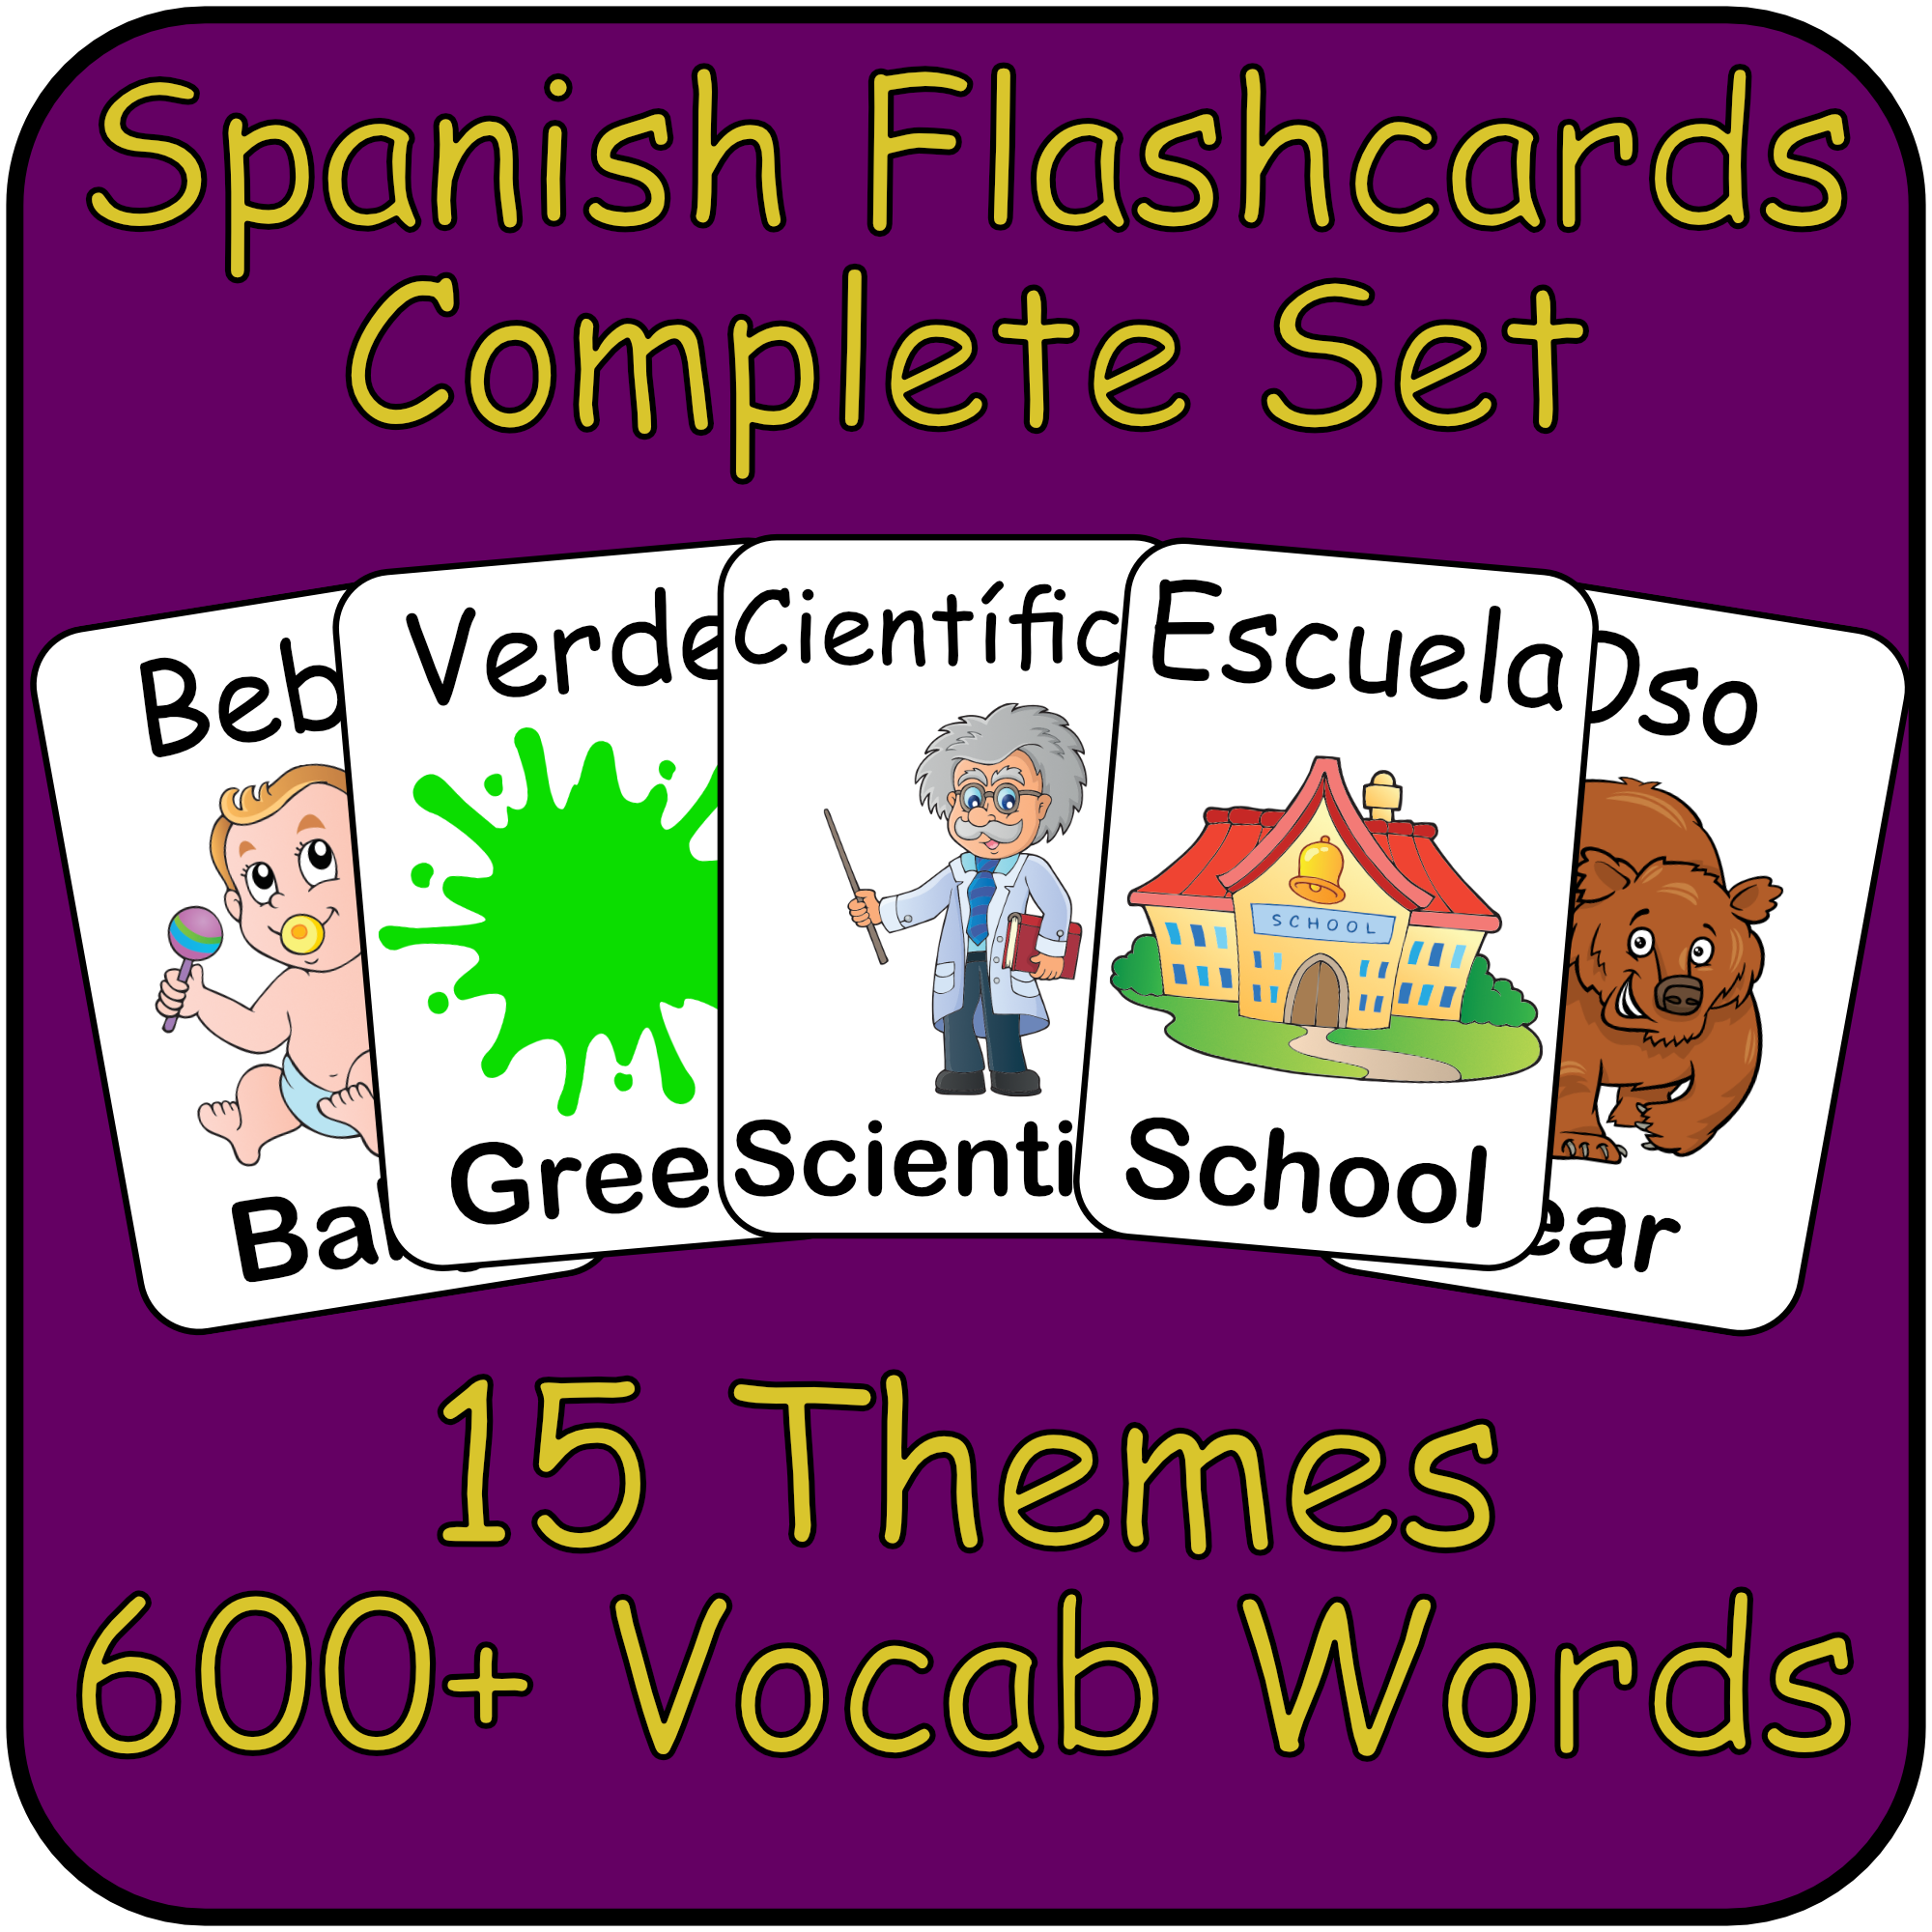 Spanish-English Flash Cards Bilingual Bundle - 600+ Vocab Words/15 Themes - ESL or Spanish for Kids!